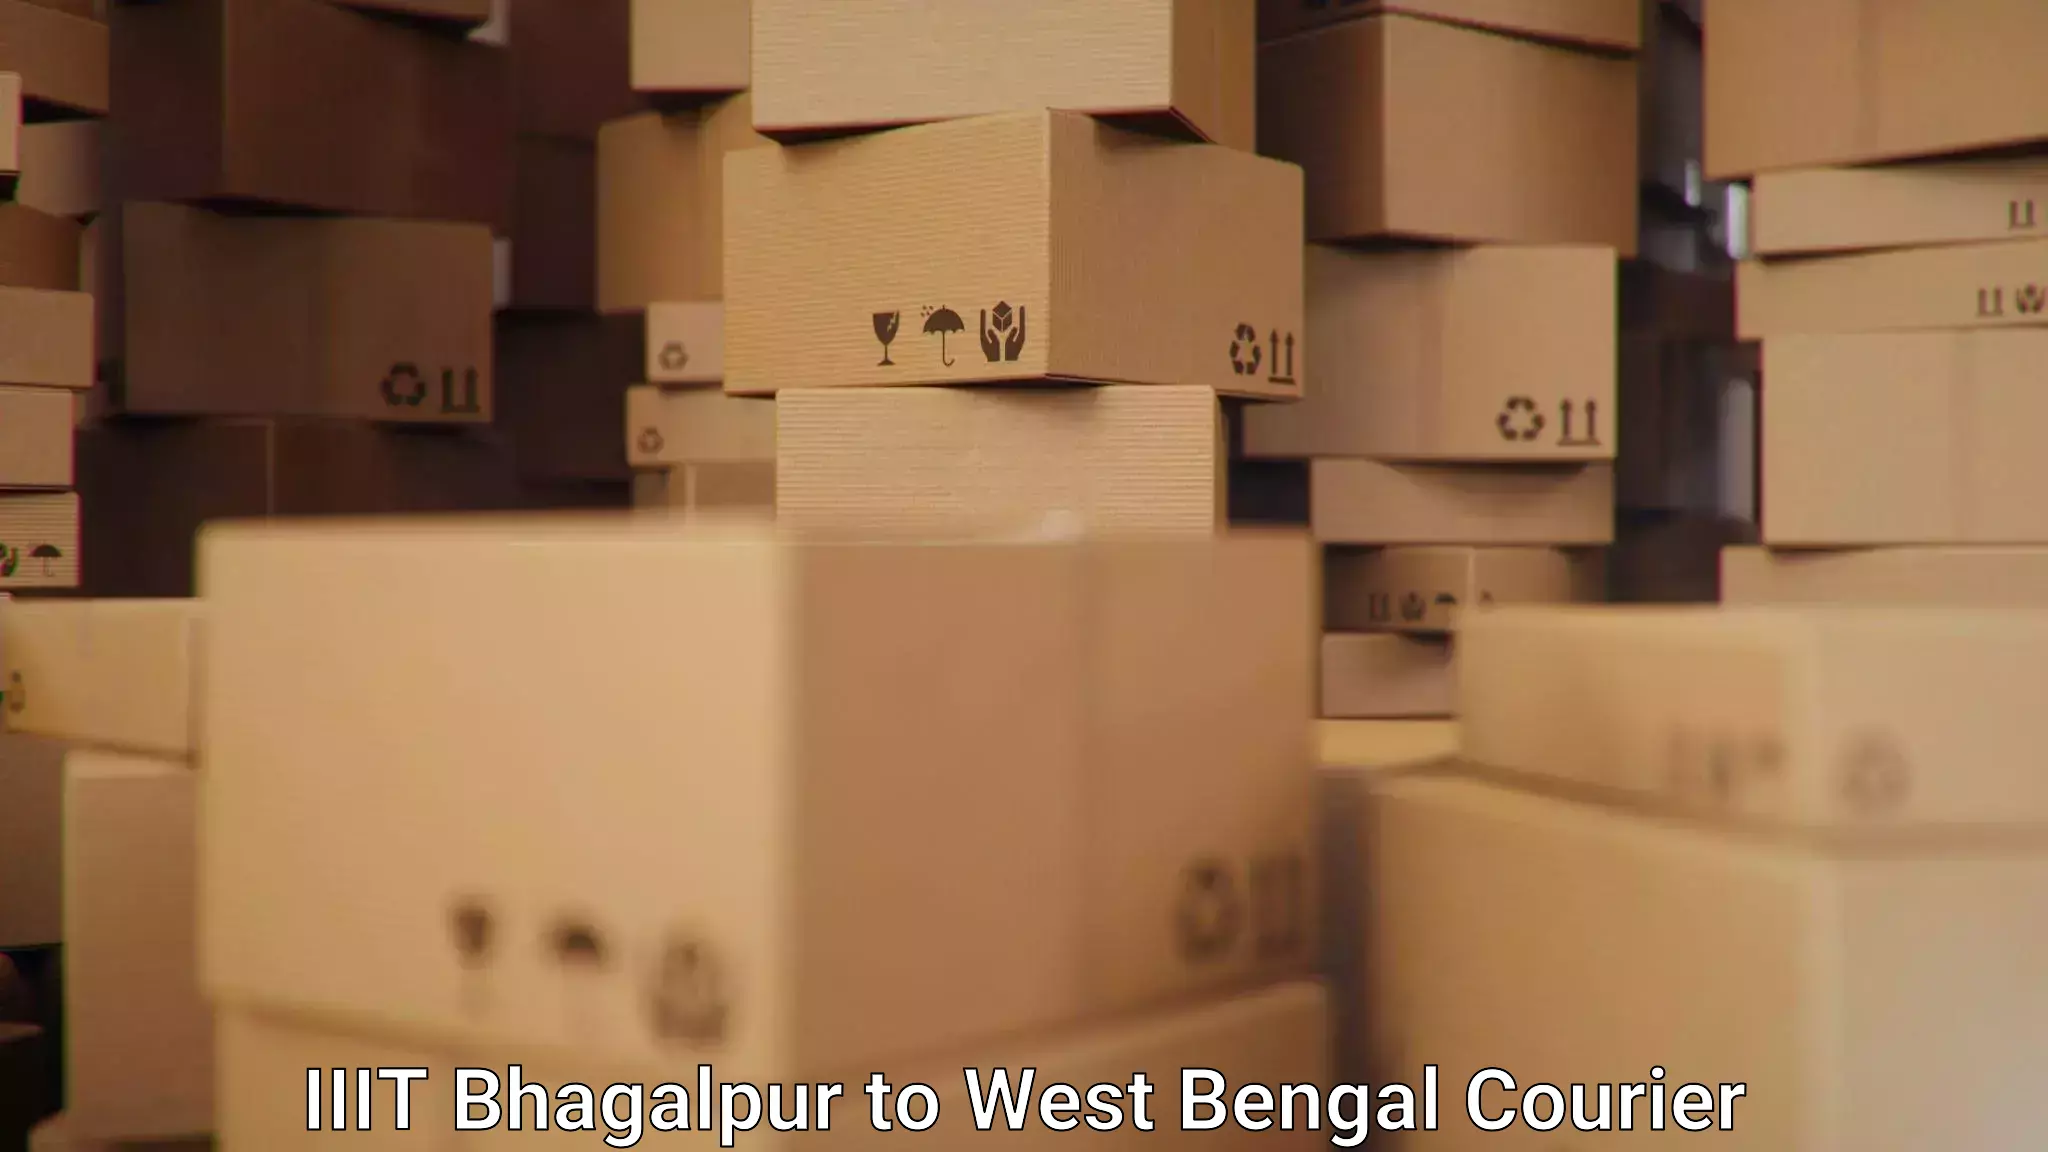 Courier service efficiency IIIT Bhagalpur to West Bengal